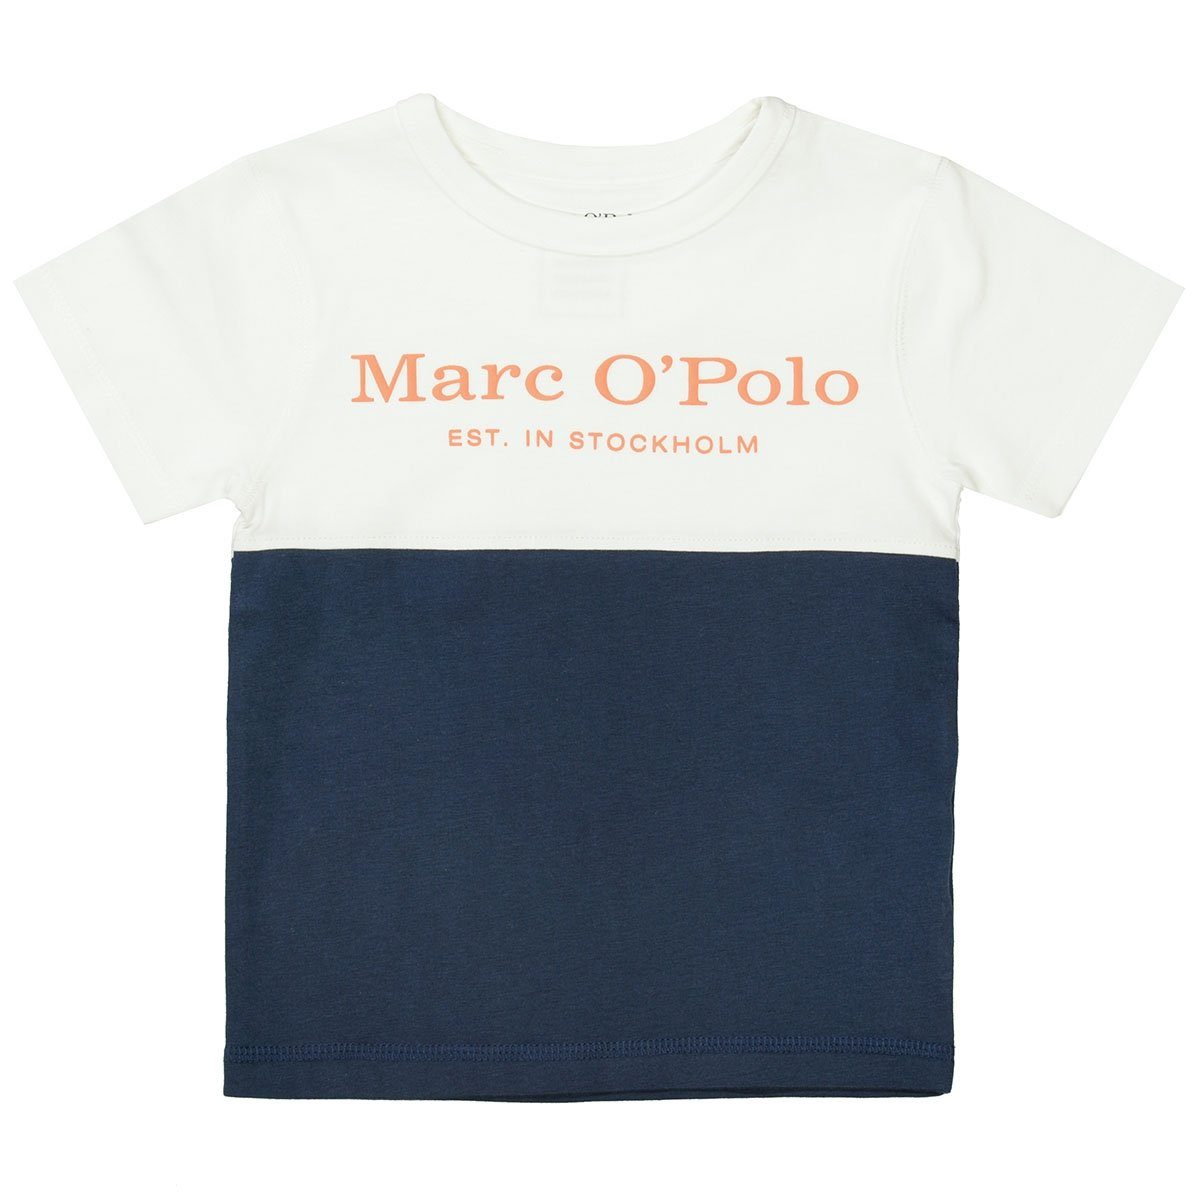 Marc O'Polo T-Shirt »MARC O'POLO T-Shirt aus Bio-Baumwolle - Offwhite  Washed Blue« online kaufen | OTTO